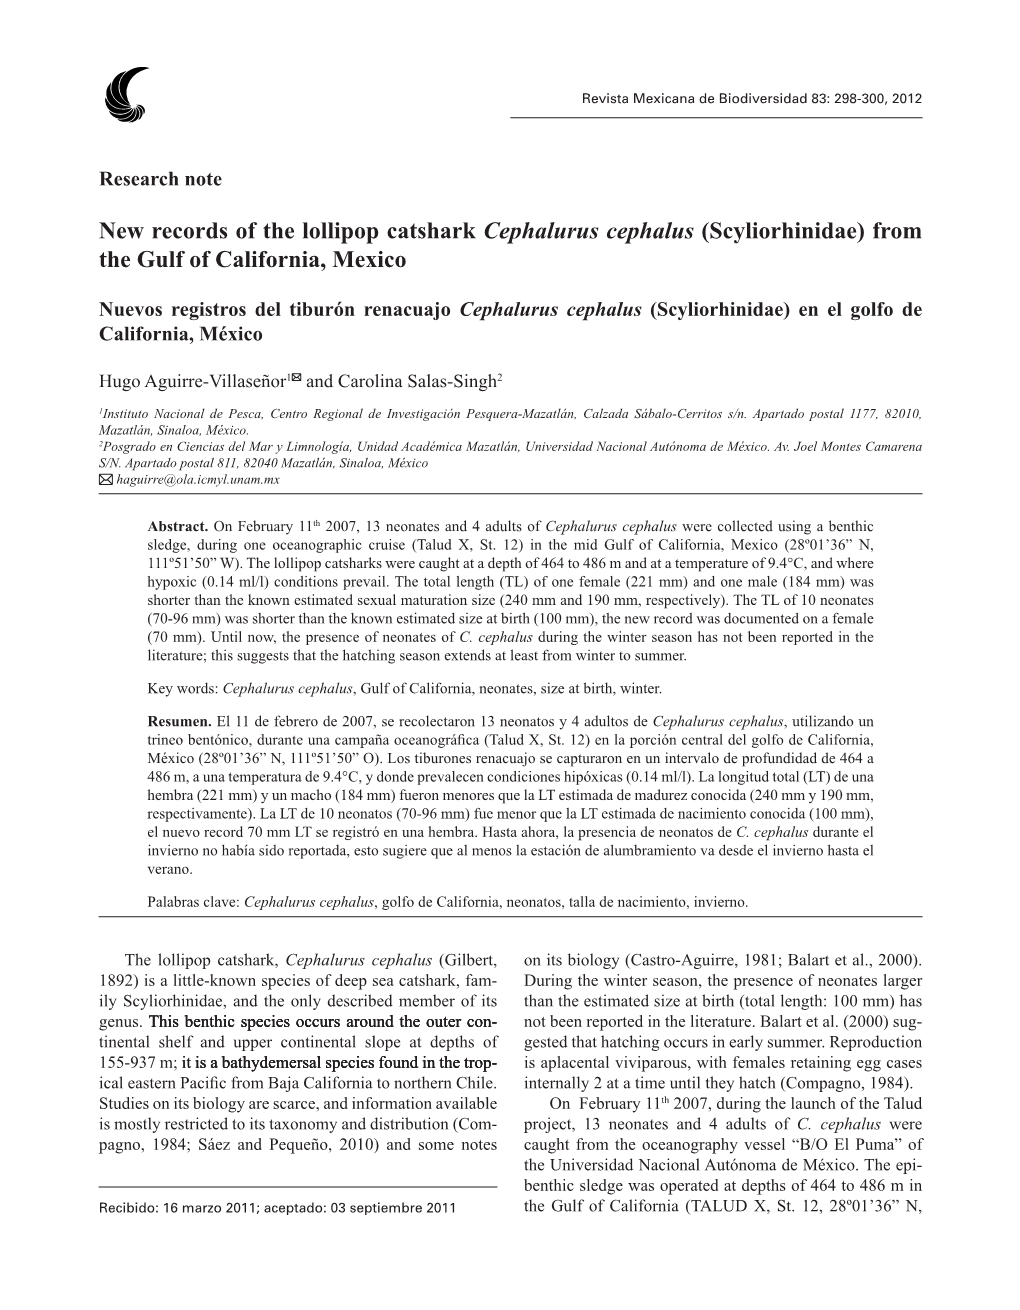 New Records of the Lollipop Catshark Cephalurus Cephalus (Scyliorhinidae) from the Gulf of California, Mexico